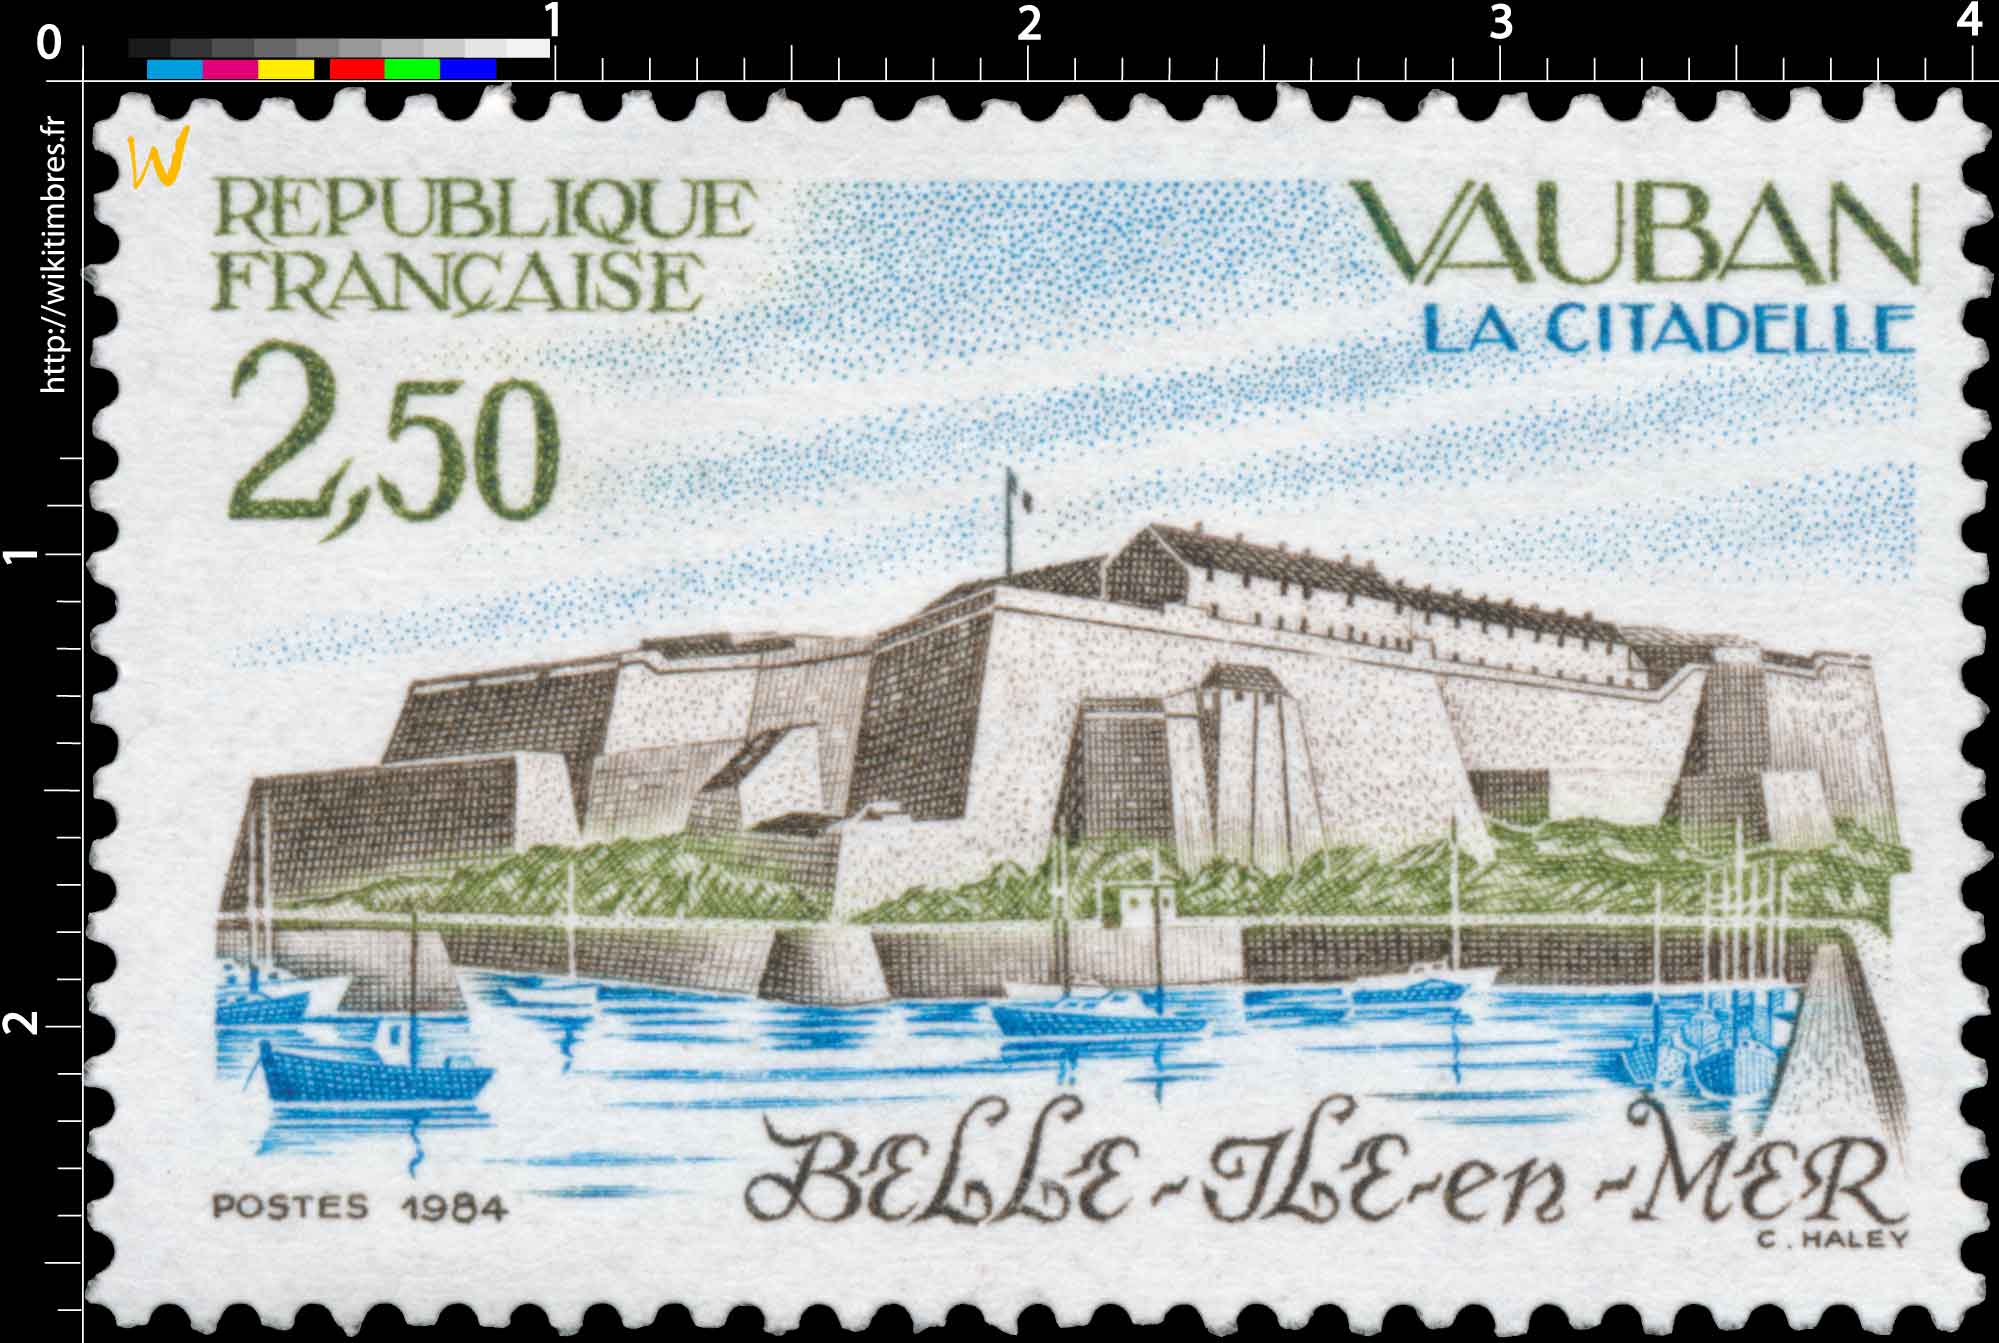 1984 VAUBAN LA CITADELLE Belle-ile-en-Mer